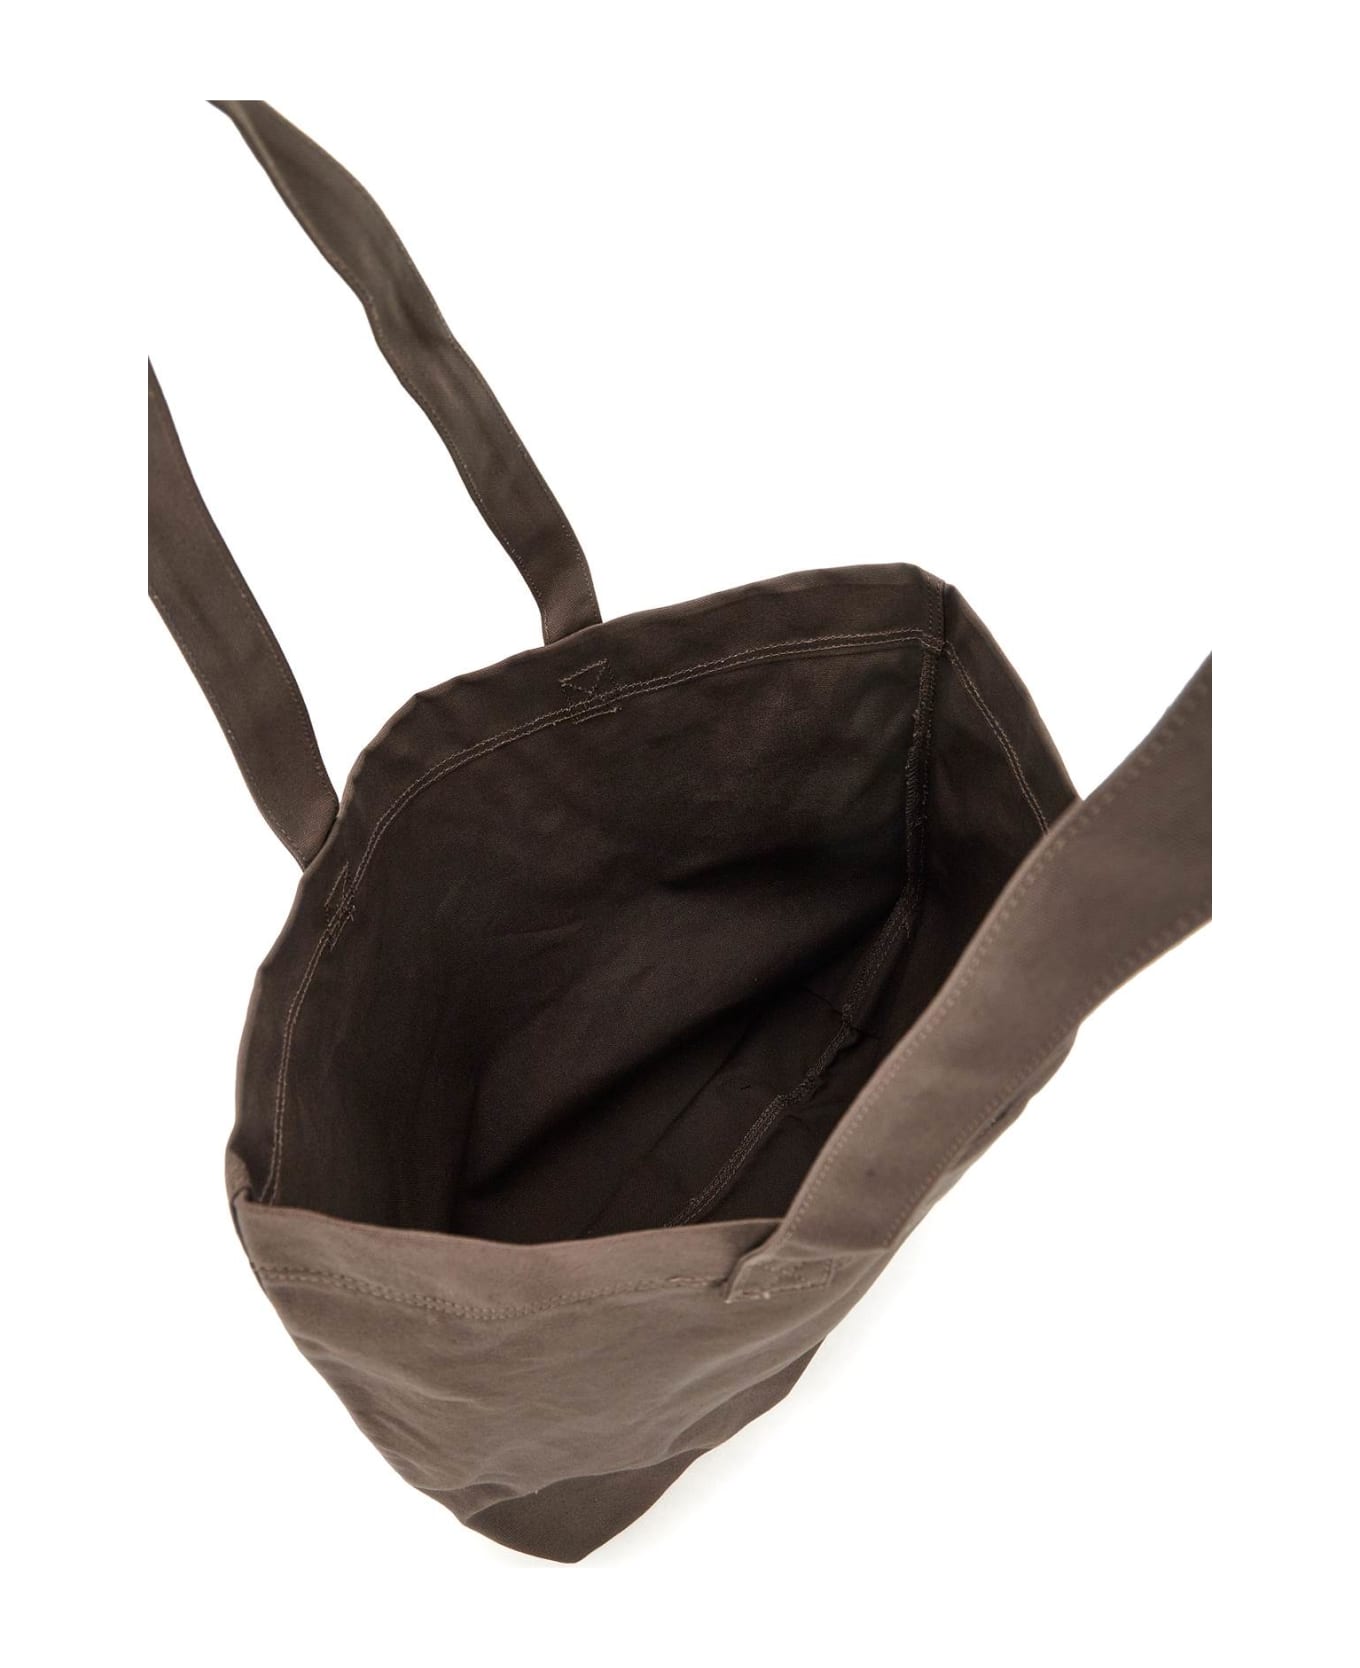 DRKSHDW Cotton Tote Bag - DUST (Grey)